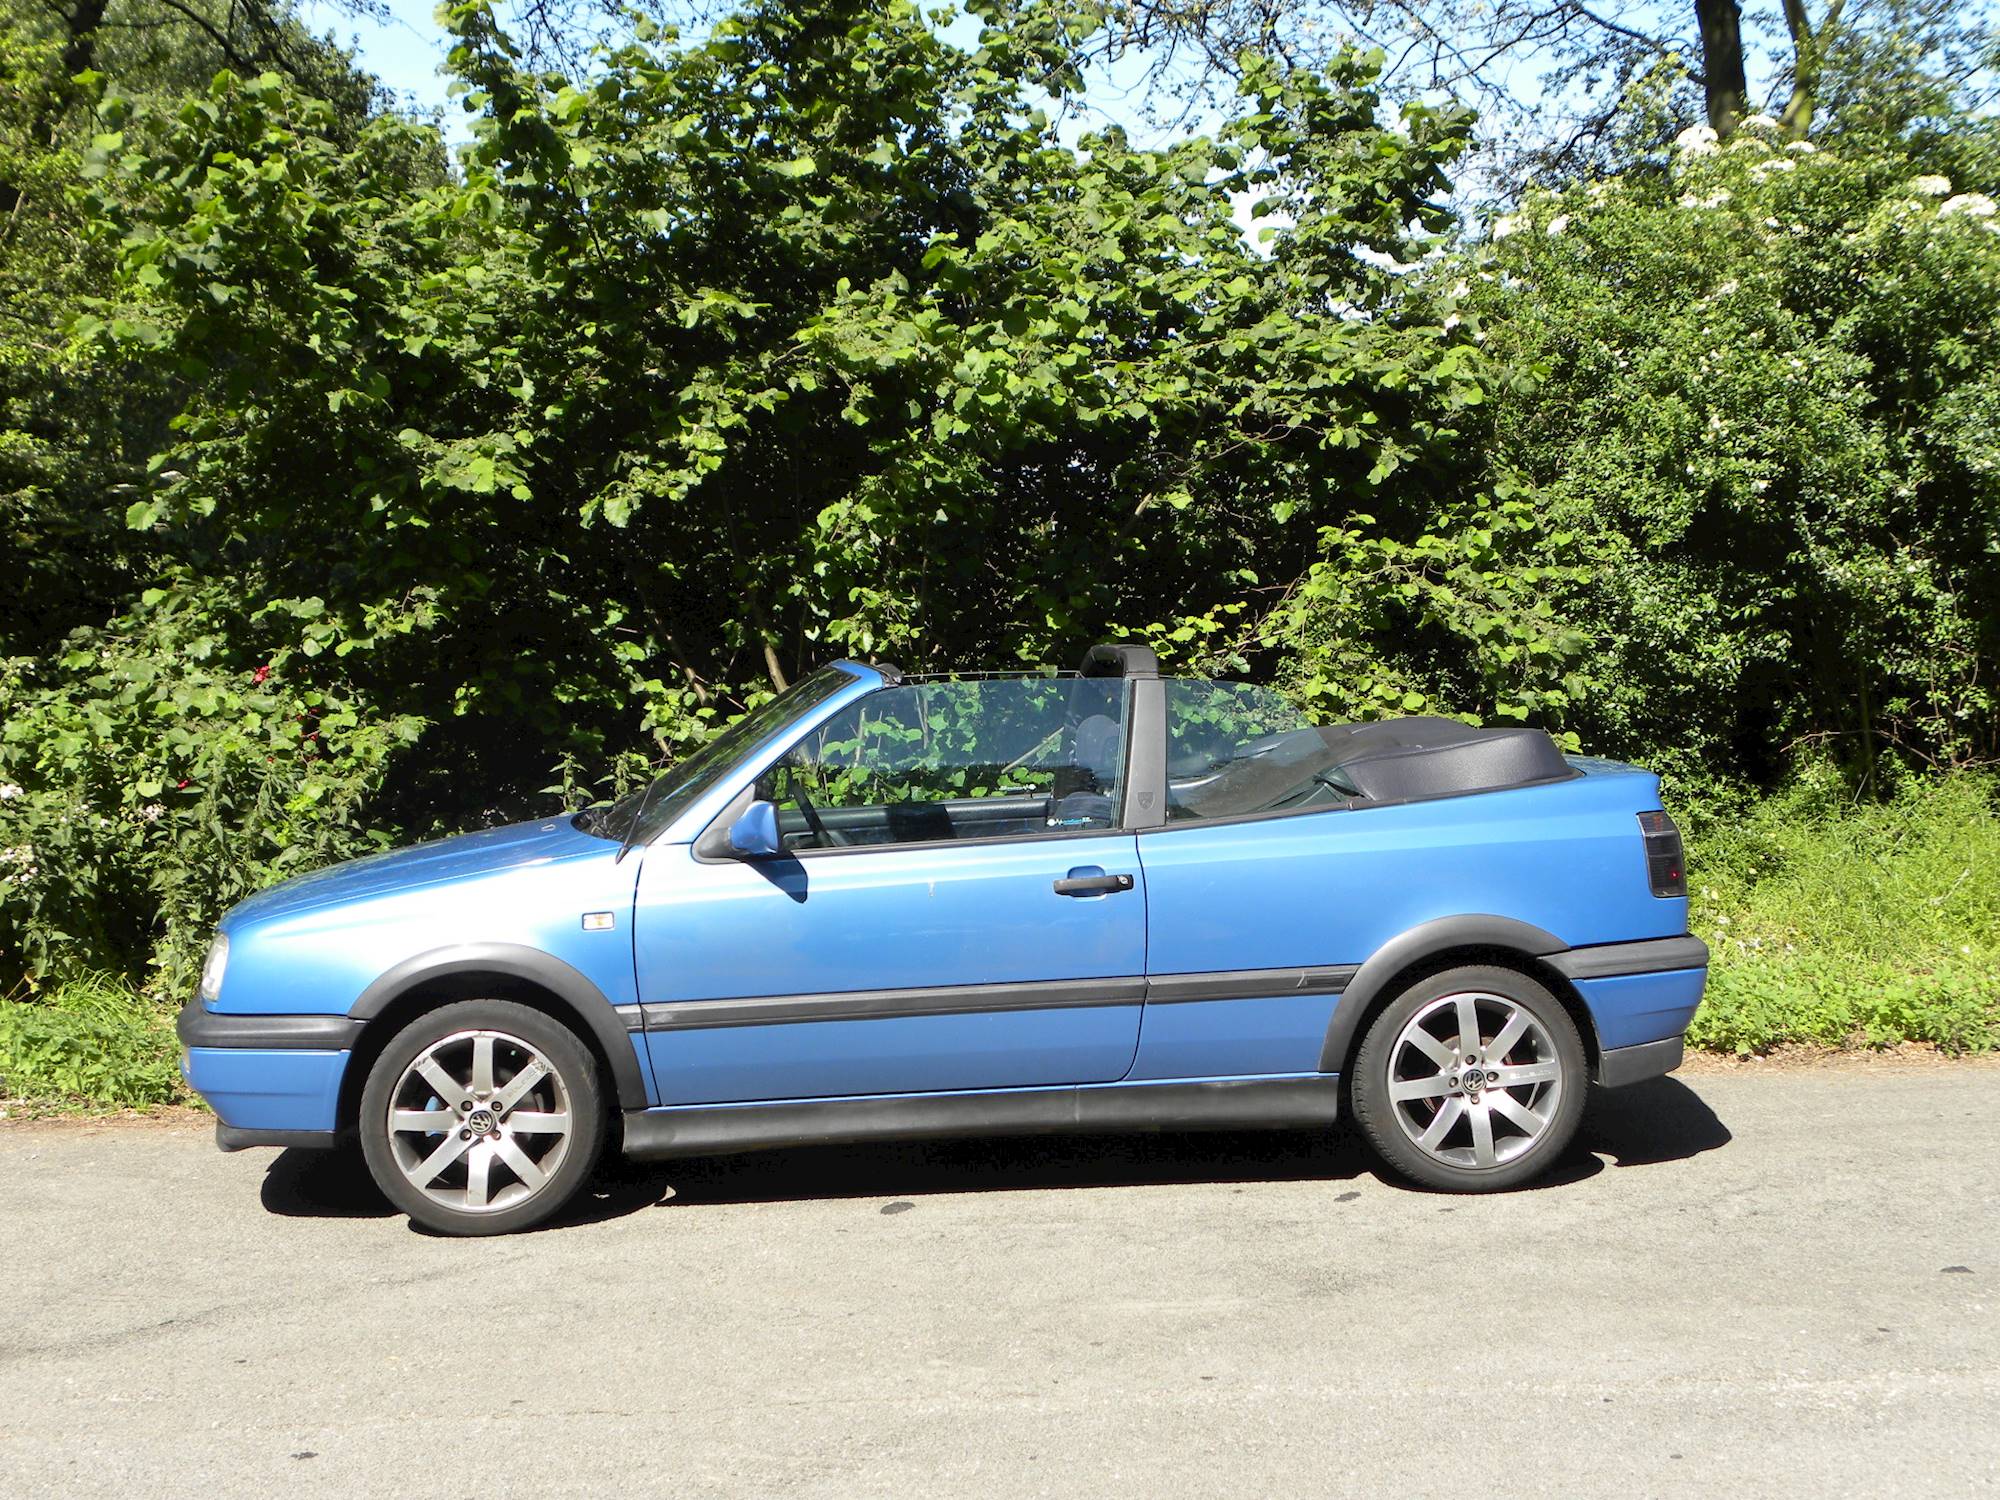 File:VW Bora Variant.jpg - Wikimedia Commons